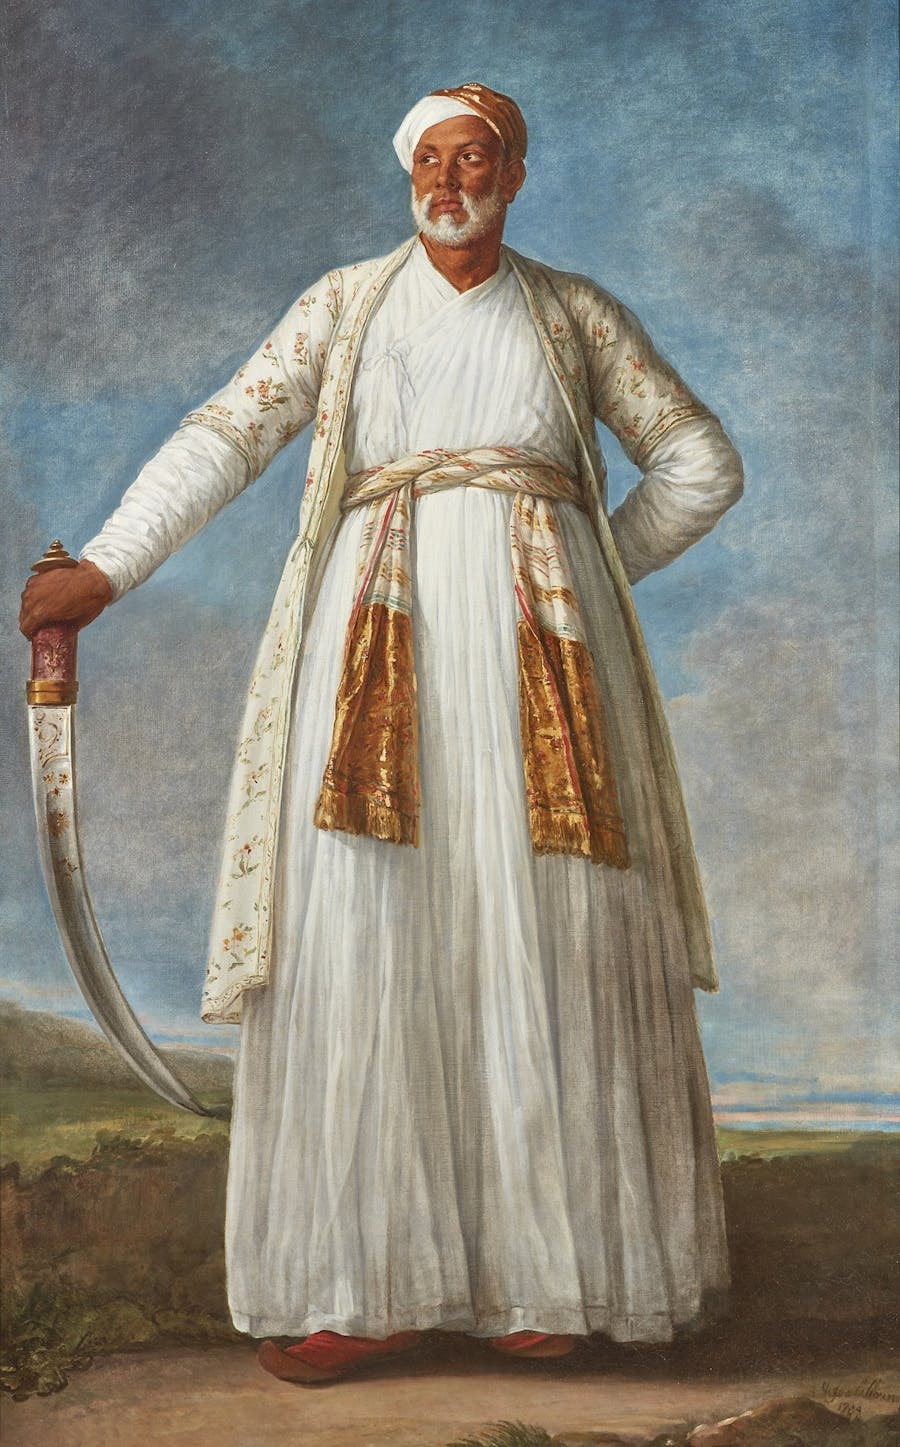 Élisabeth Vigée Le Brun, ‘Portrait of Muhammad Dervish Khan’, 1788, olja på duk. Foto public domain